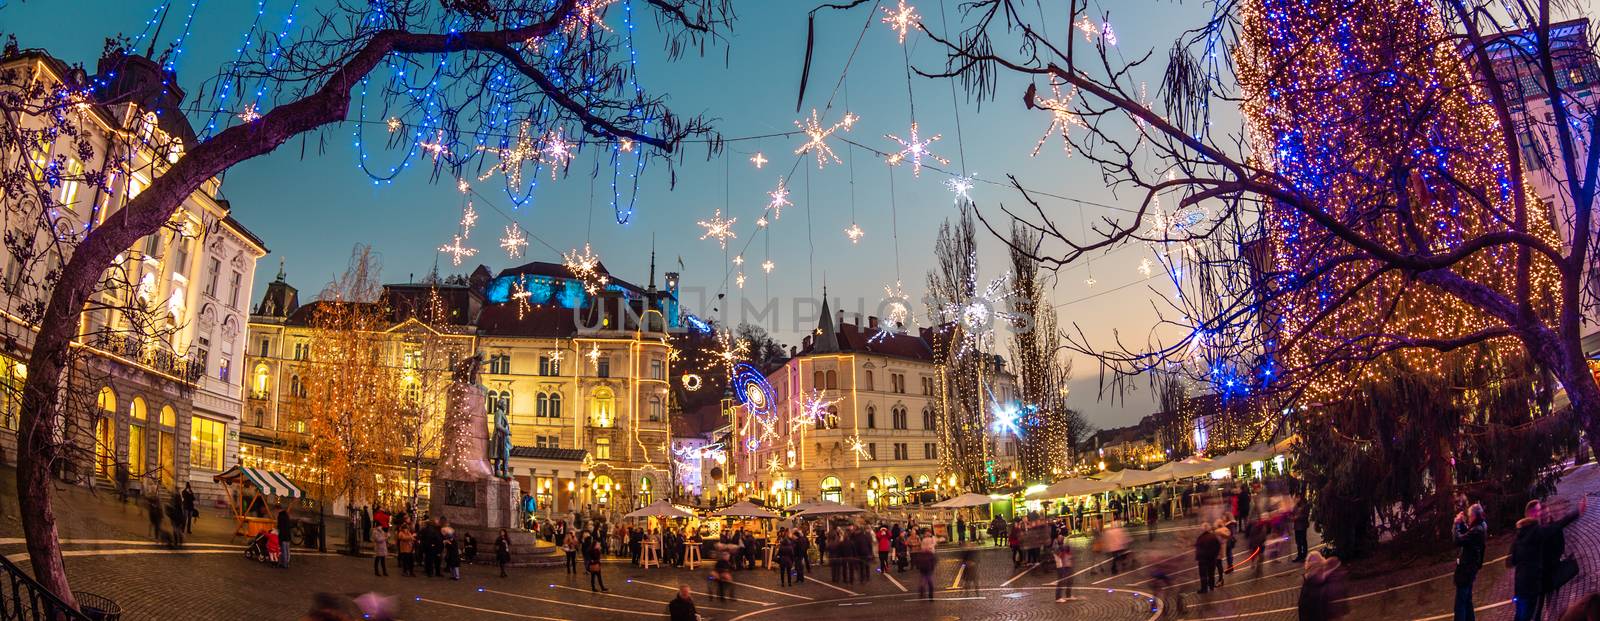 Romantic Ljubljana's city center decorated for Christmas holidays. Preseren's square, Ljubljana, Slovenia, Europe by kasto